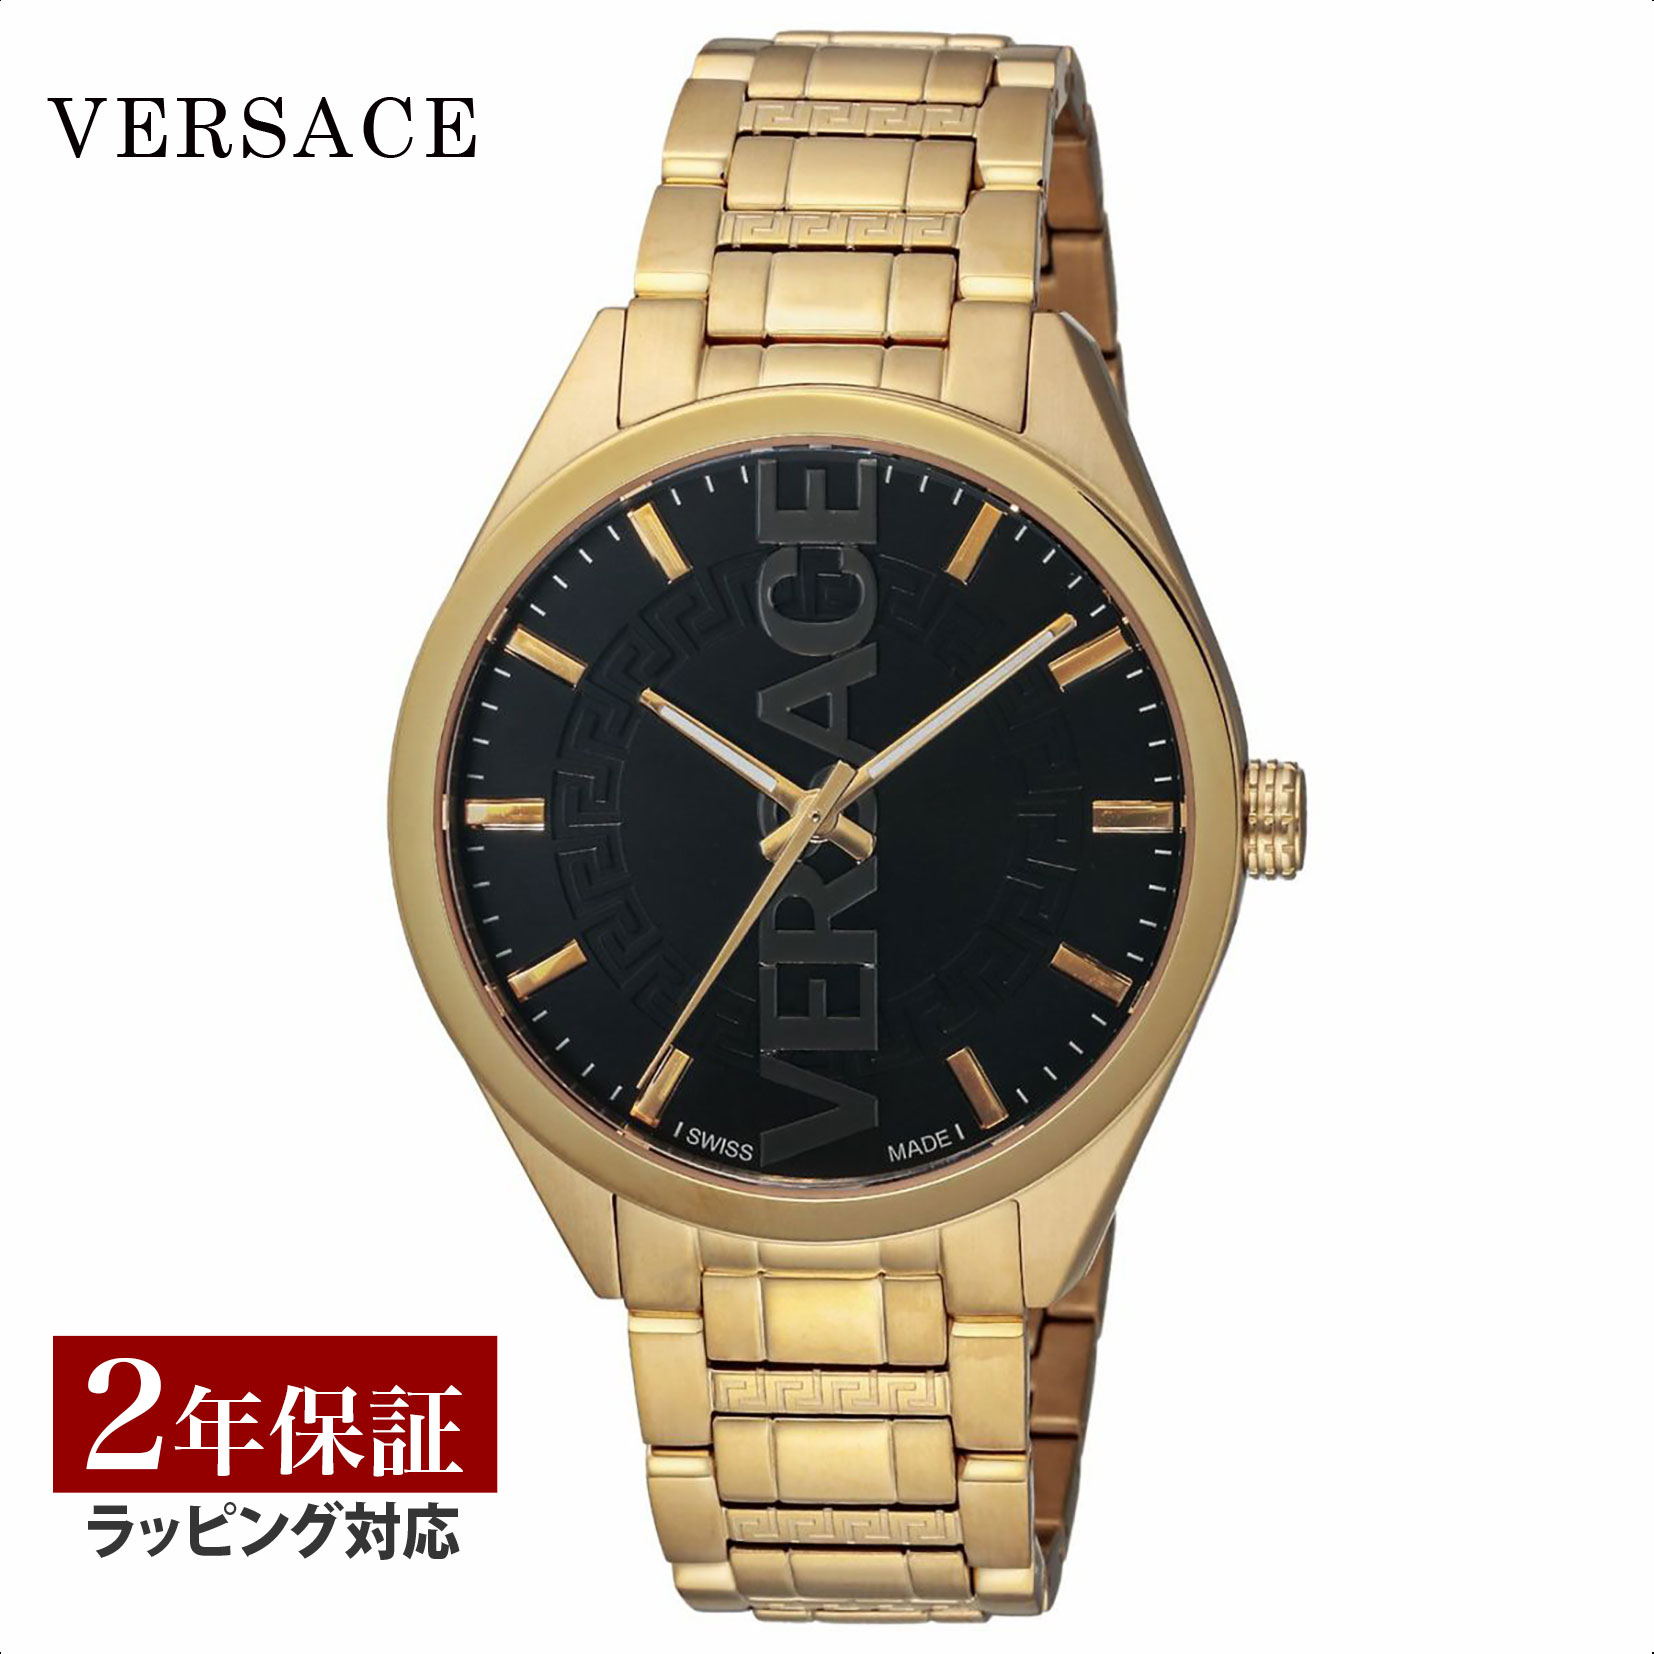 【OUTLET】 ヴェルサーチェ ヴェルサーチ VERSACE メンズ 時計 V-VERTICAL クォーツ ブラック VE3H00622 時計 腕時計 高級腕時計 ブランド 【クリアランス】